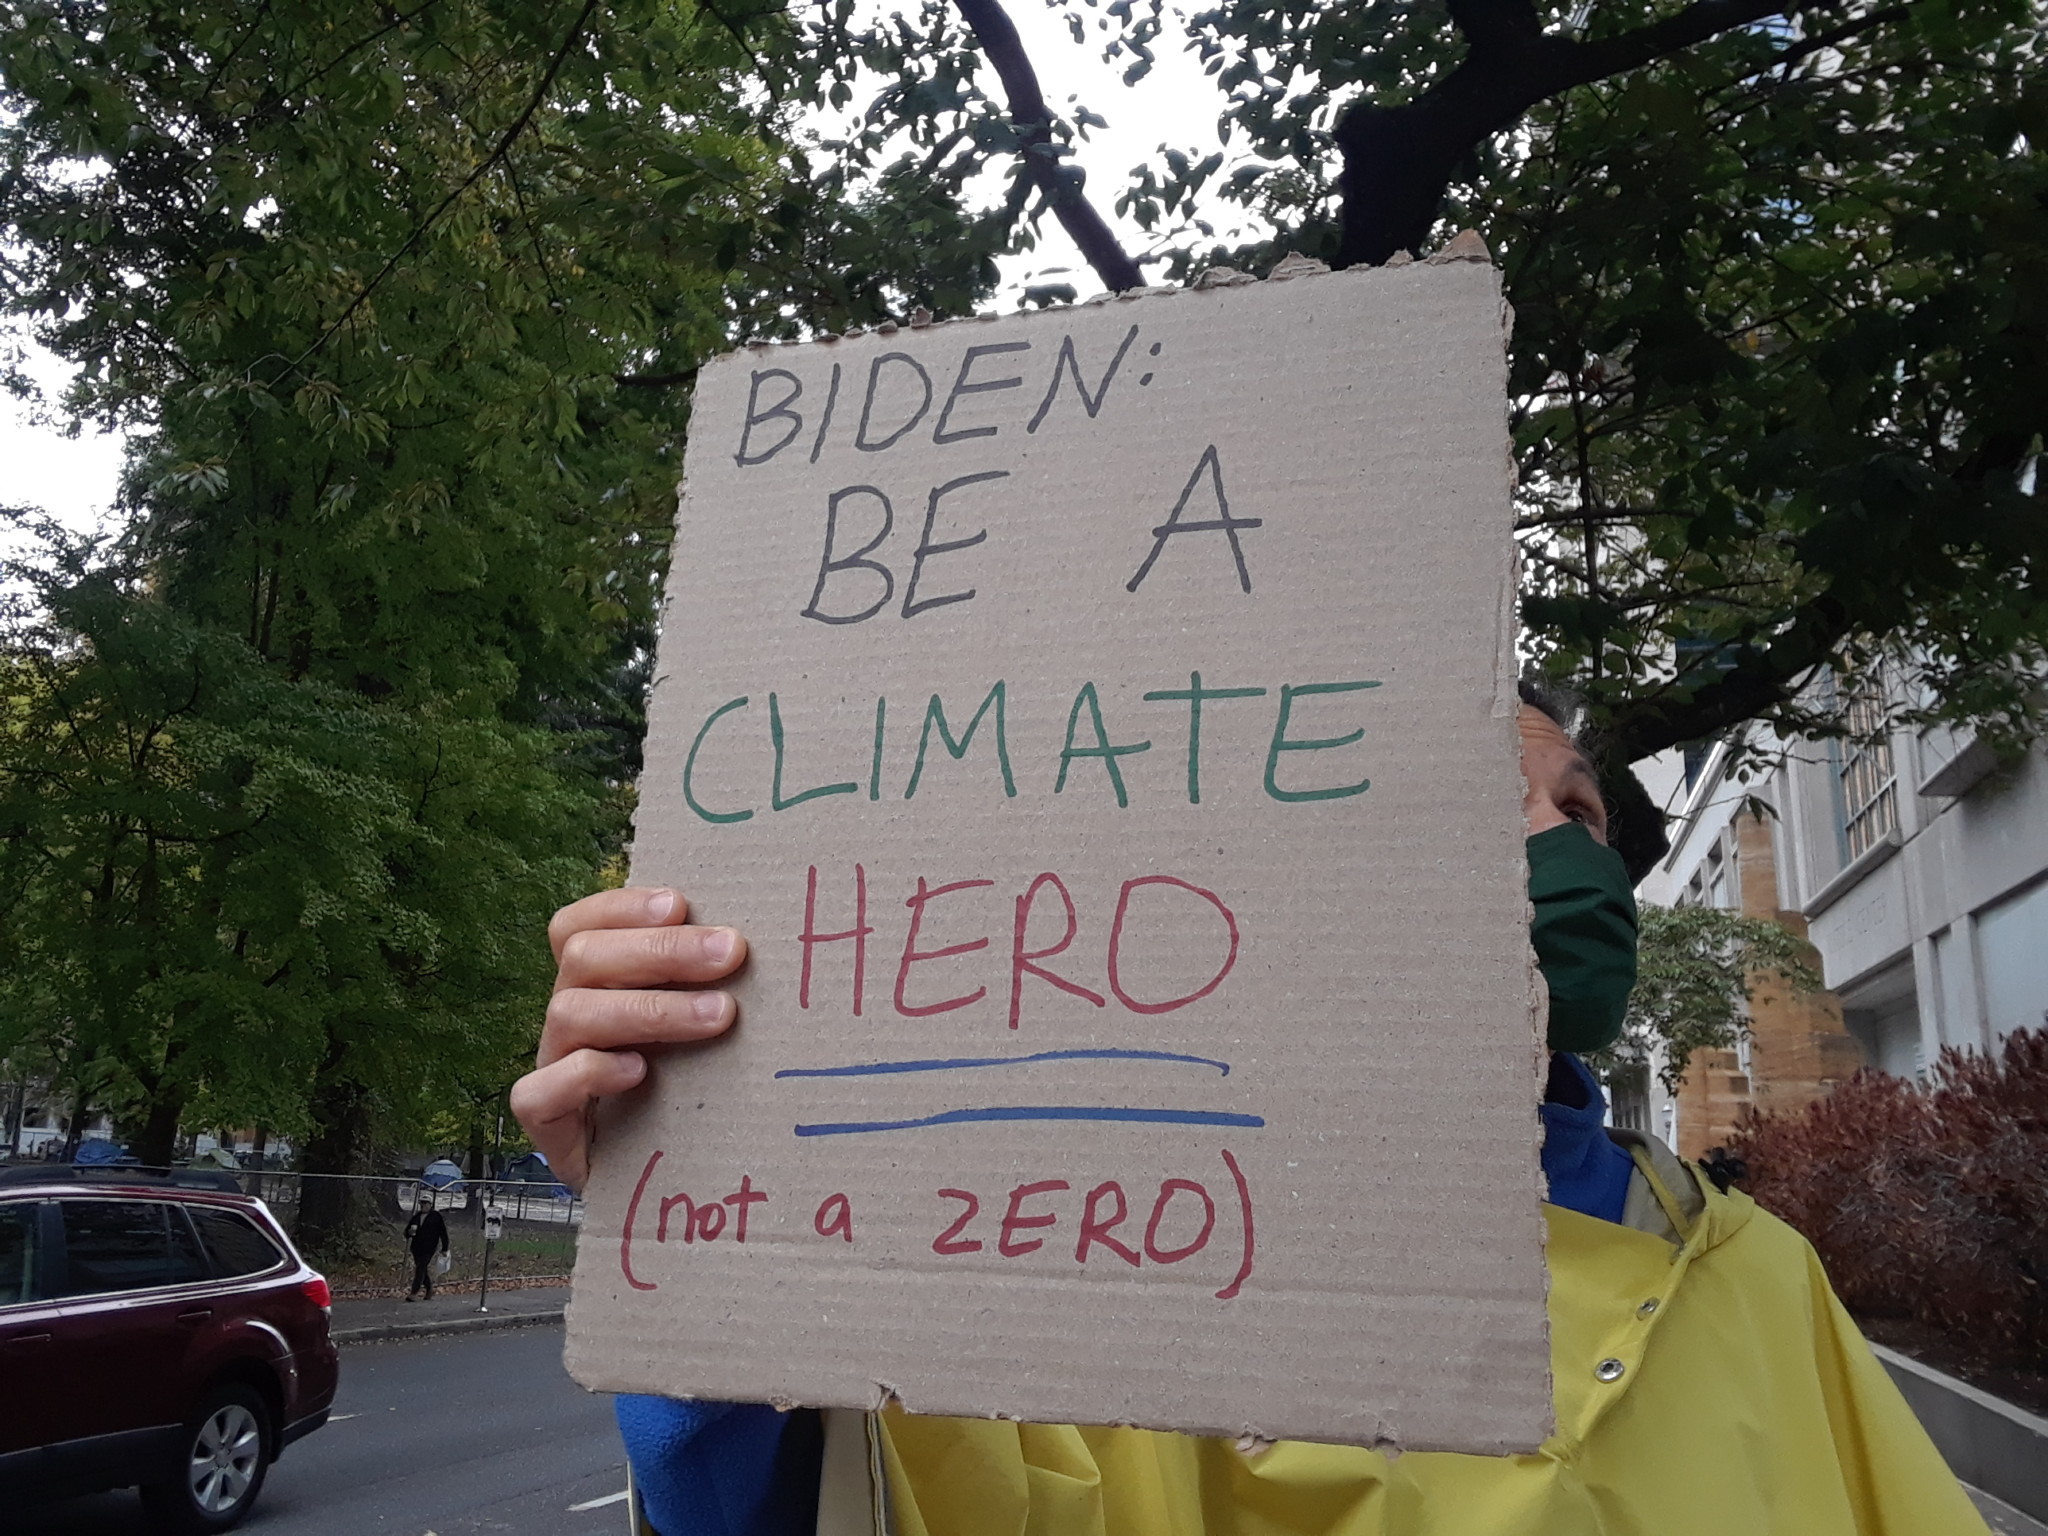 Cardboard sign reading "Biden: Be A Climate Hero (not a ZERO)